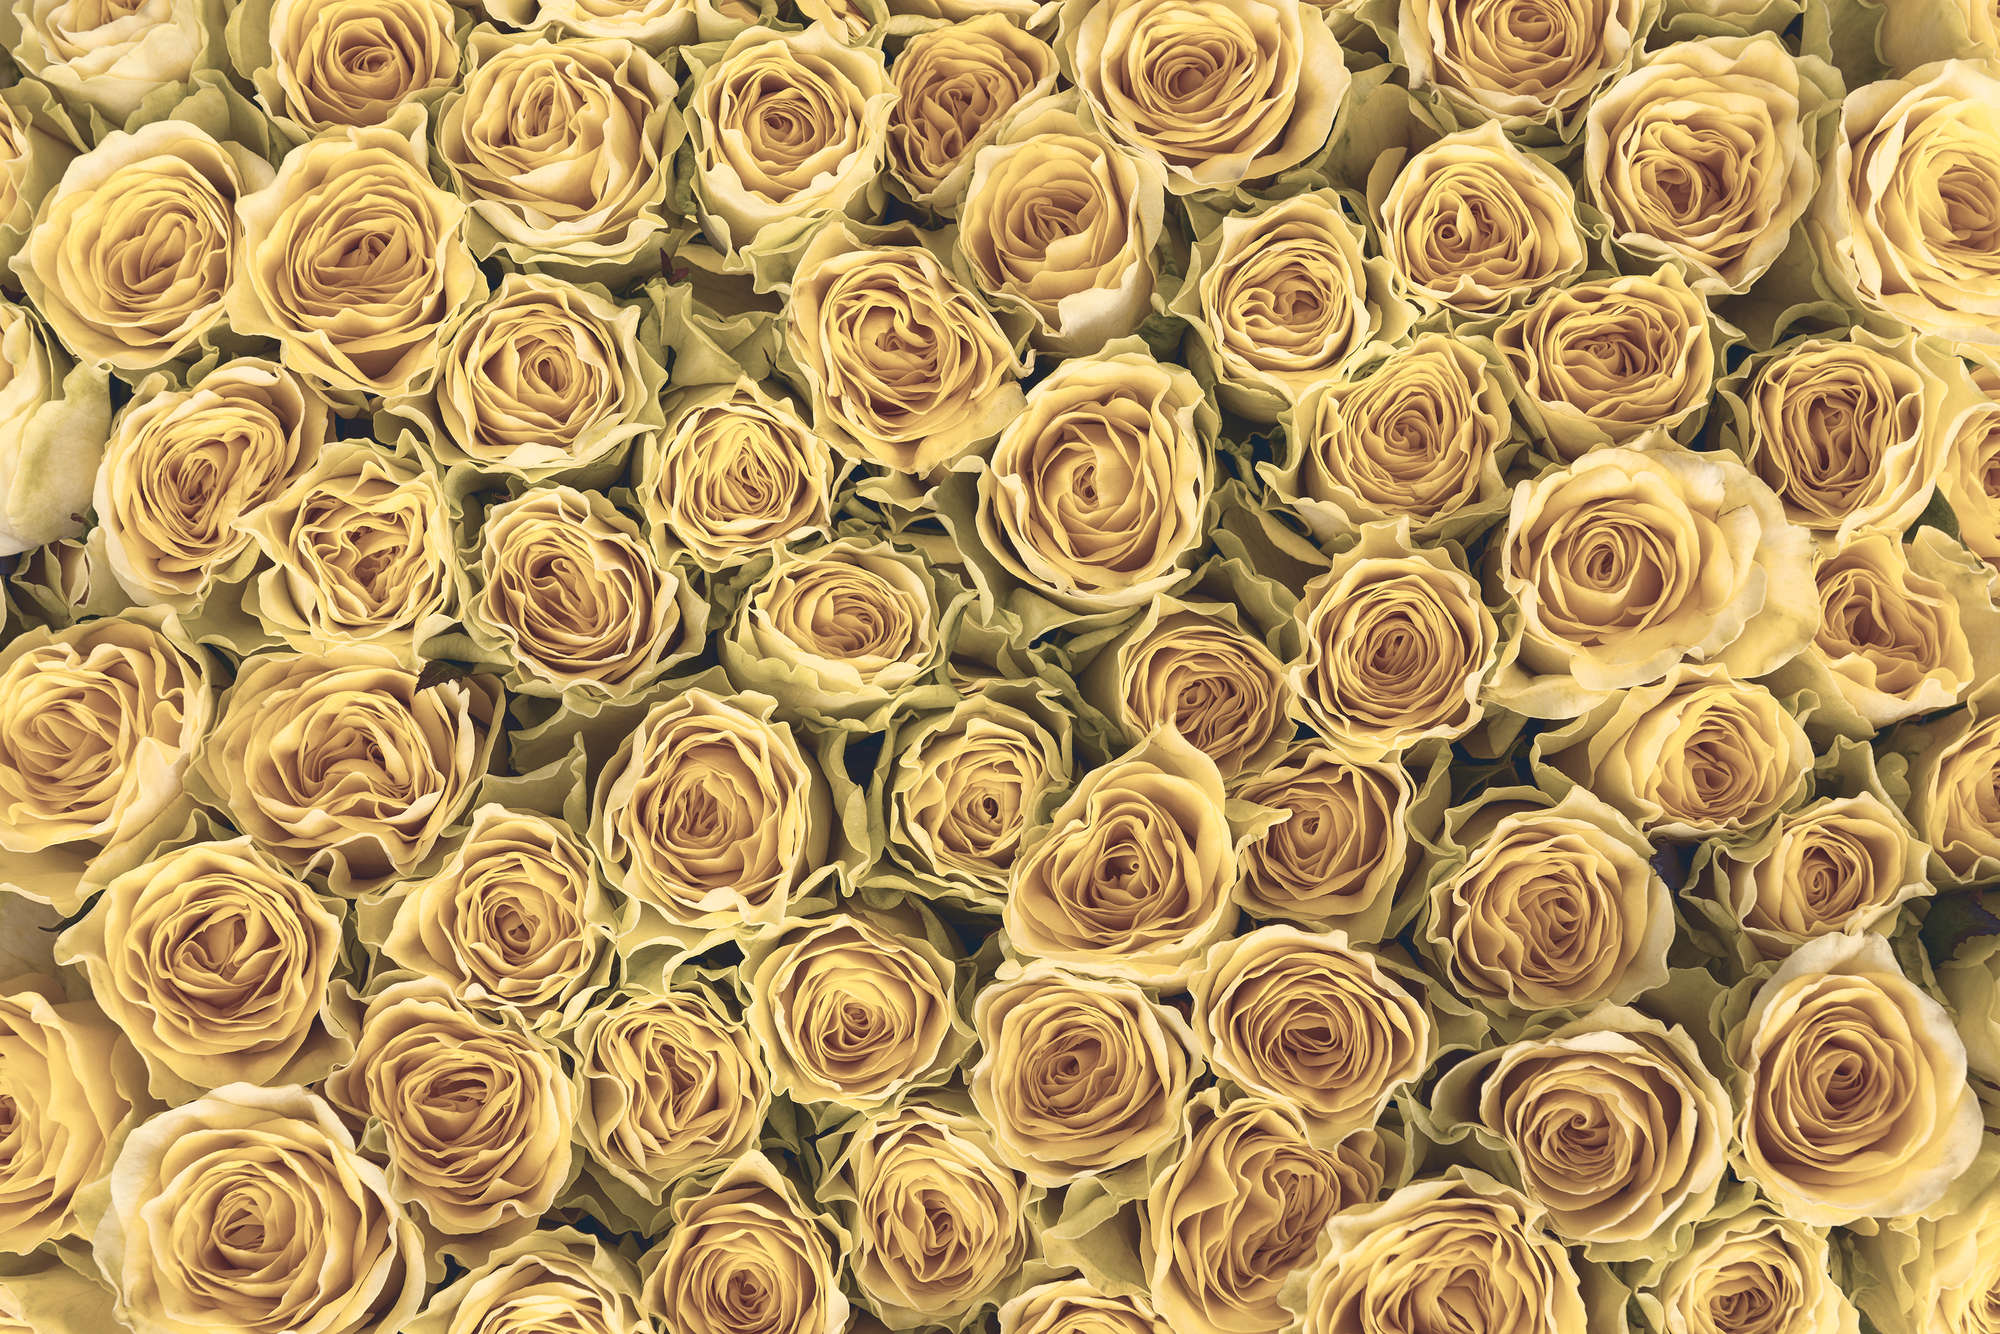             Pflanzen Fototapete goldene Rosen auf Premium Glattvlies
        